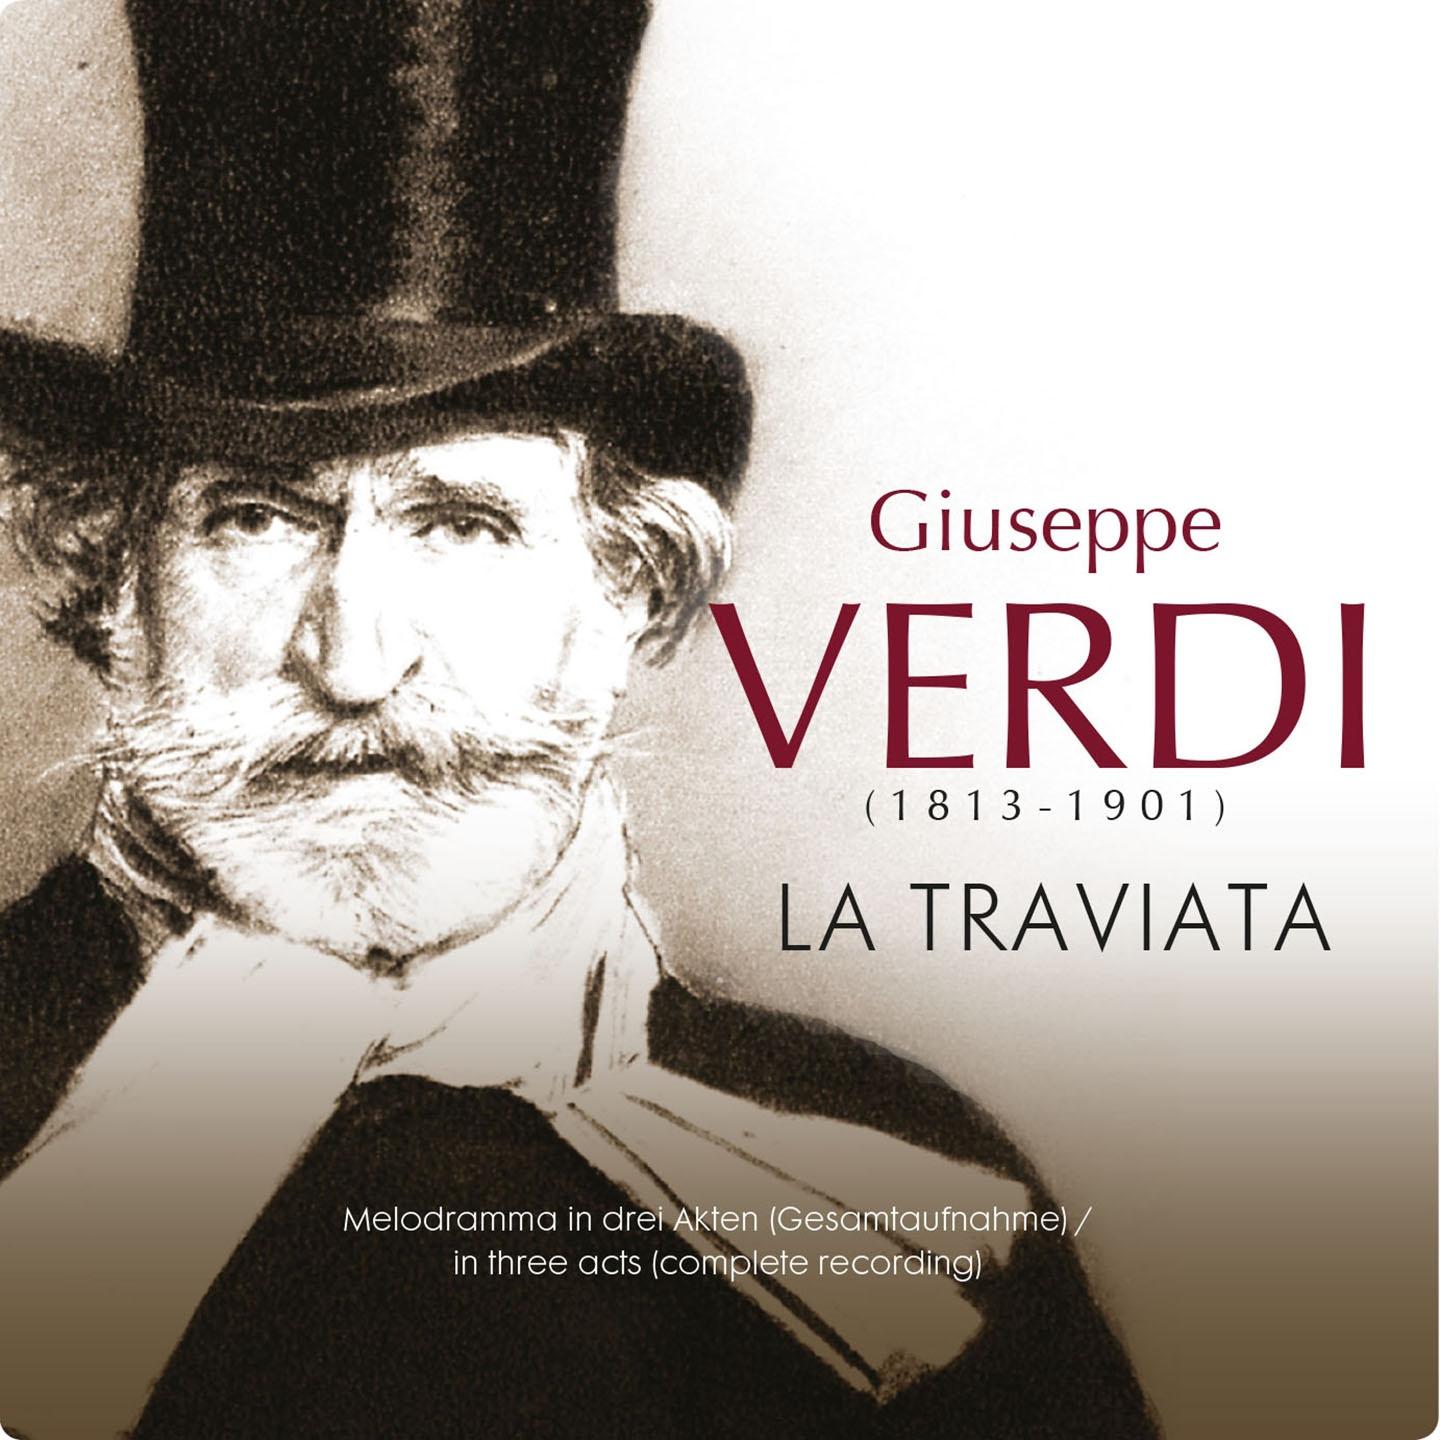 La Traviata, Act III: "Ah, Violetta! ... Voi, signor!"